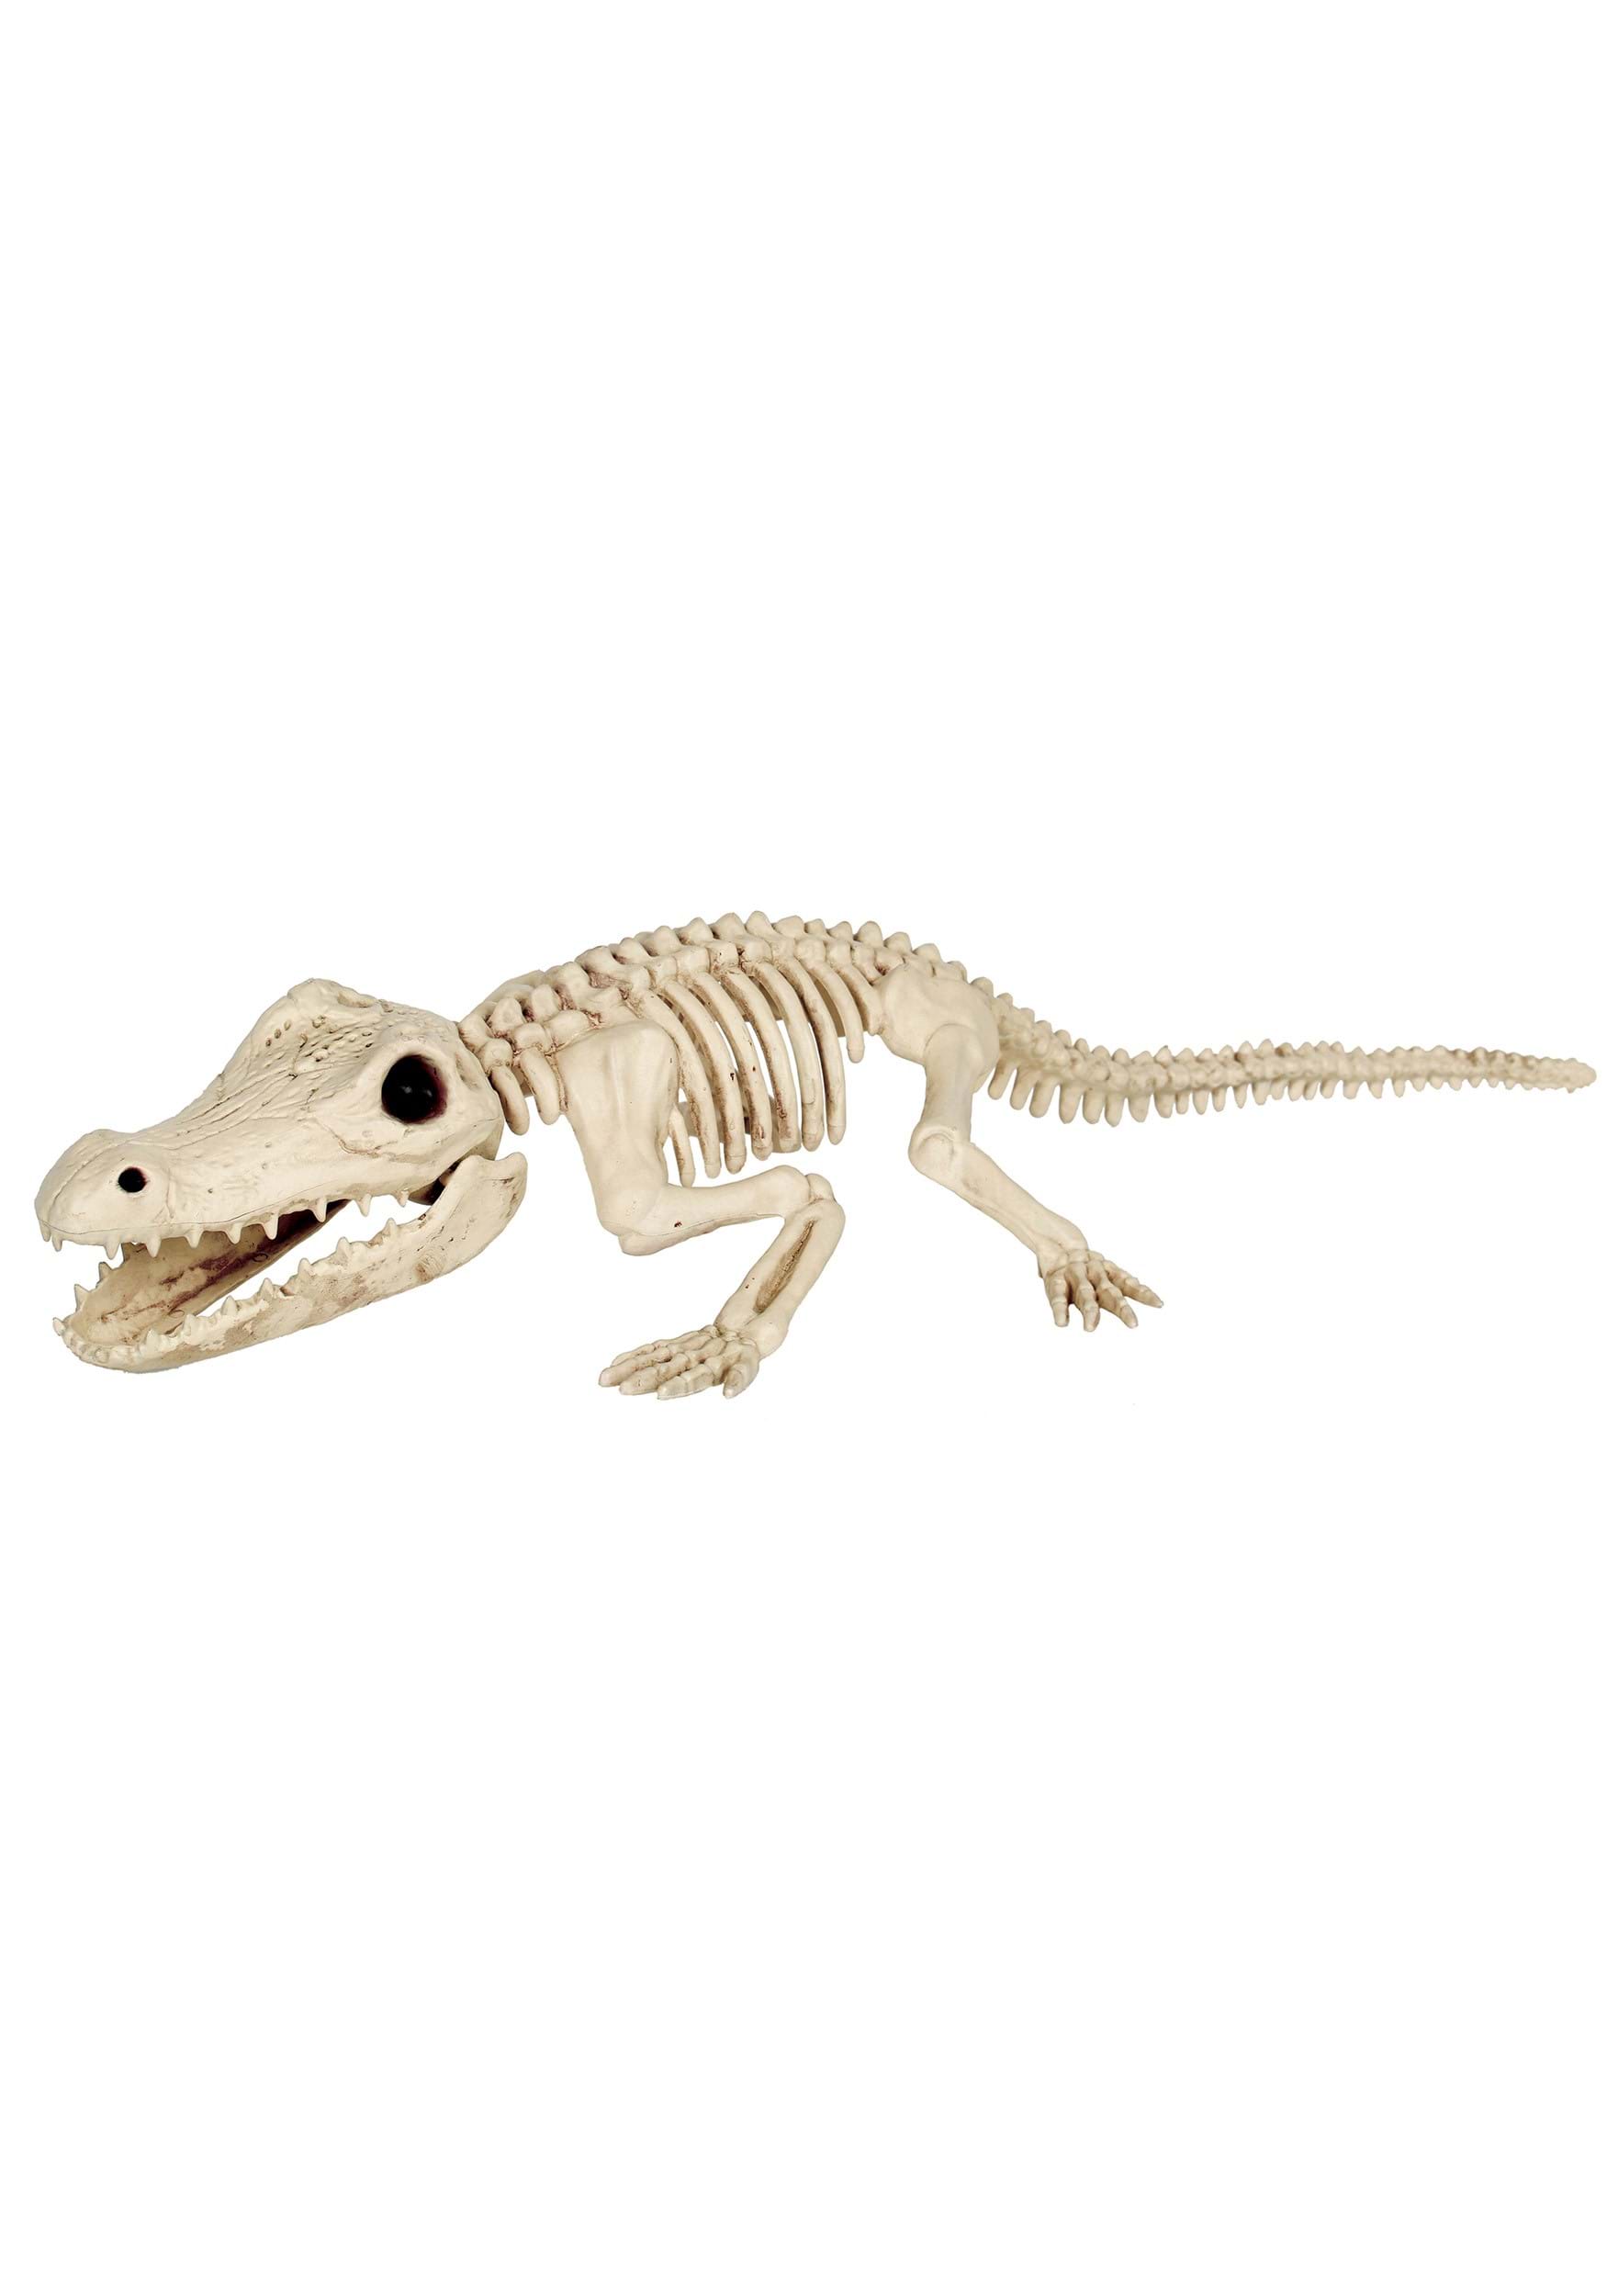 31 Inch Crocodile Skeleton Decoration Skeleton Animal Decoations